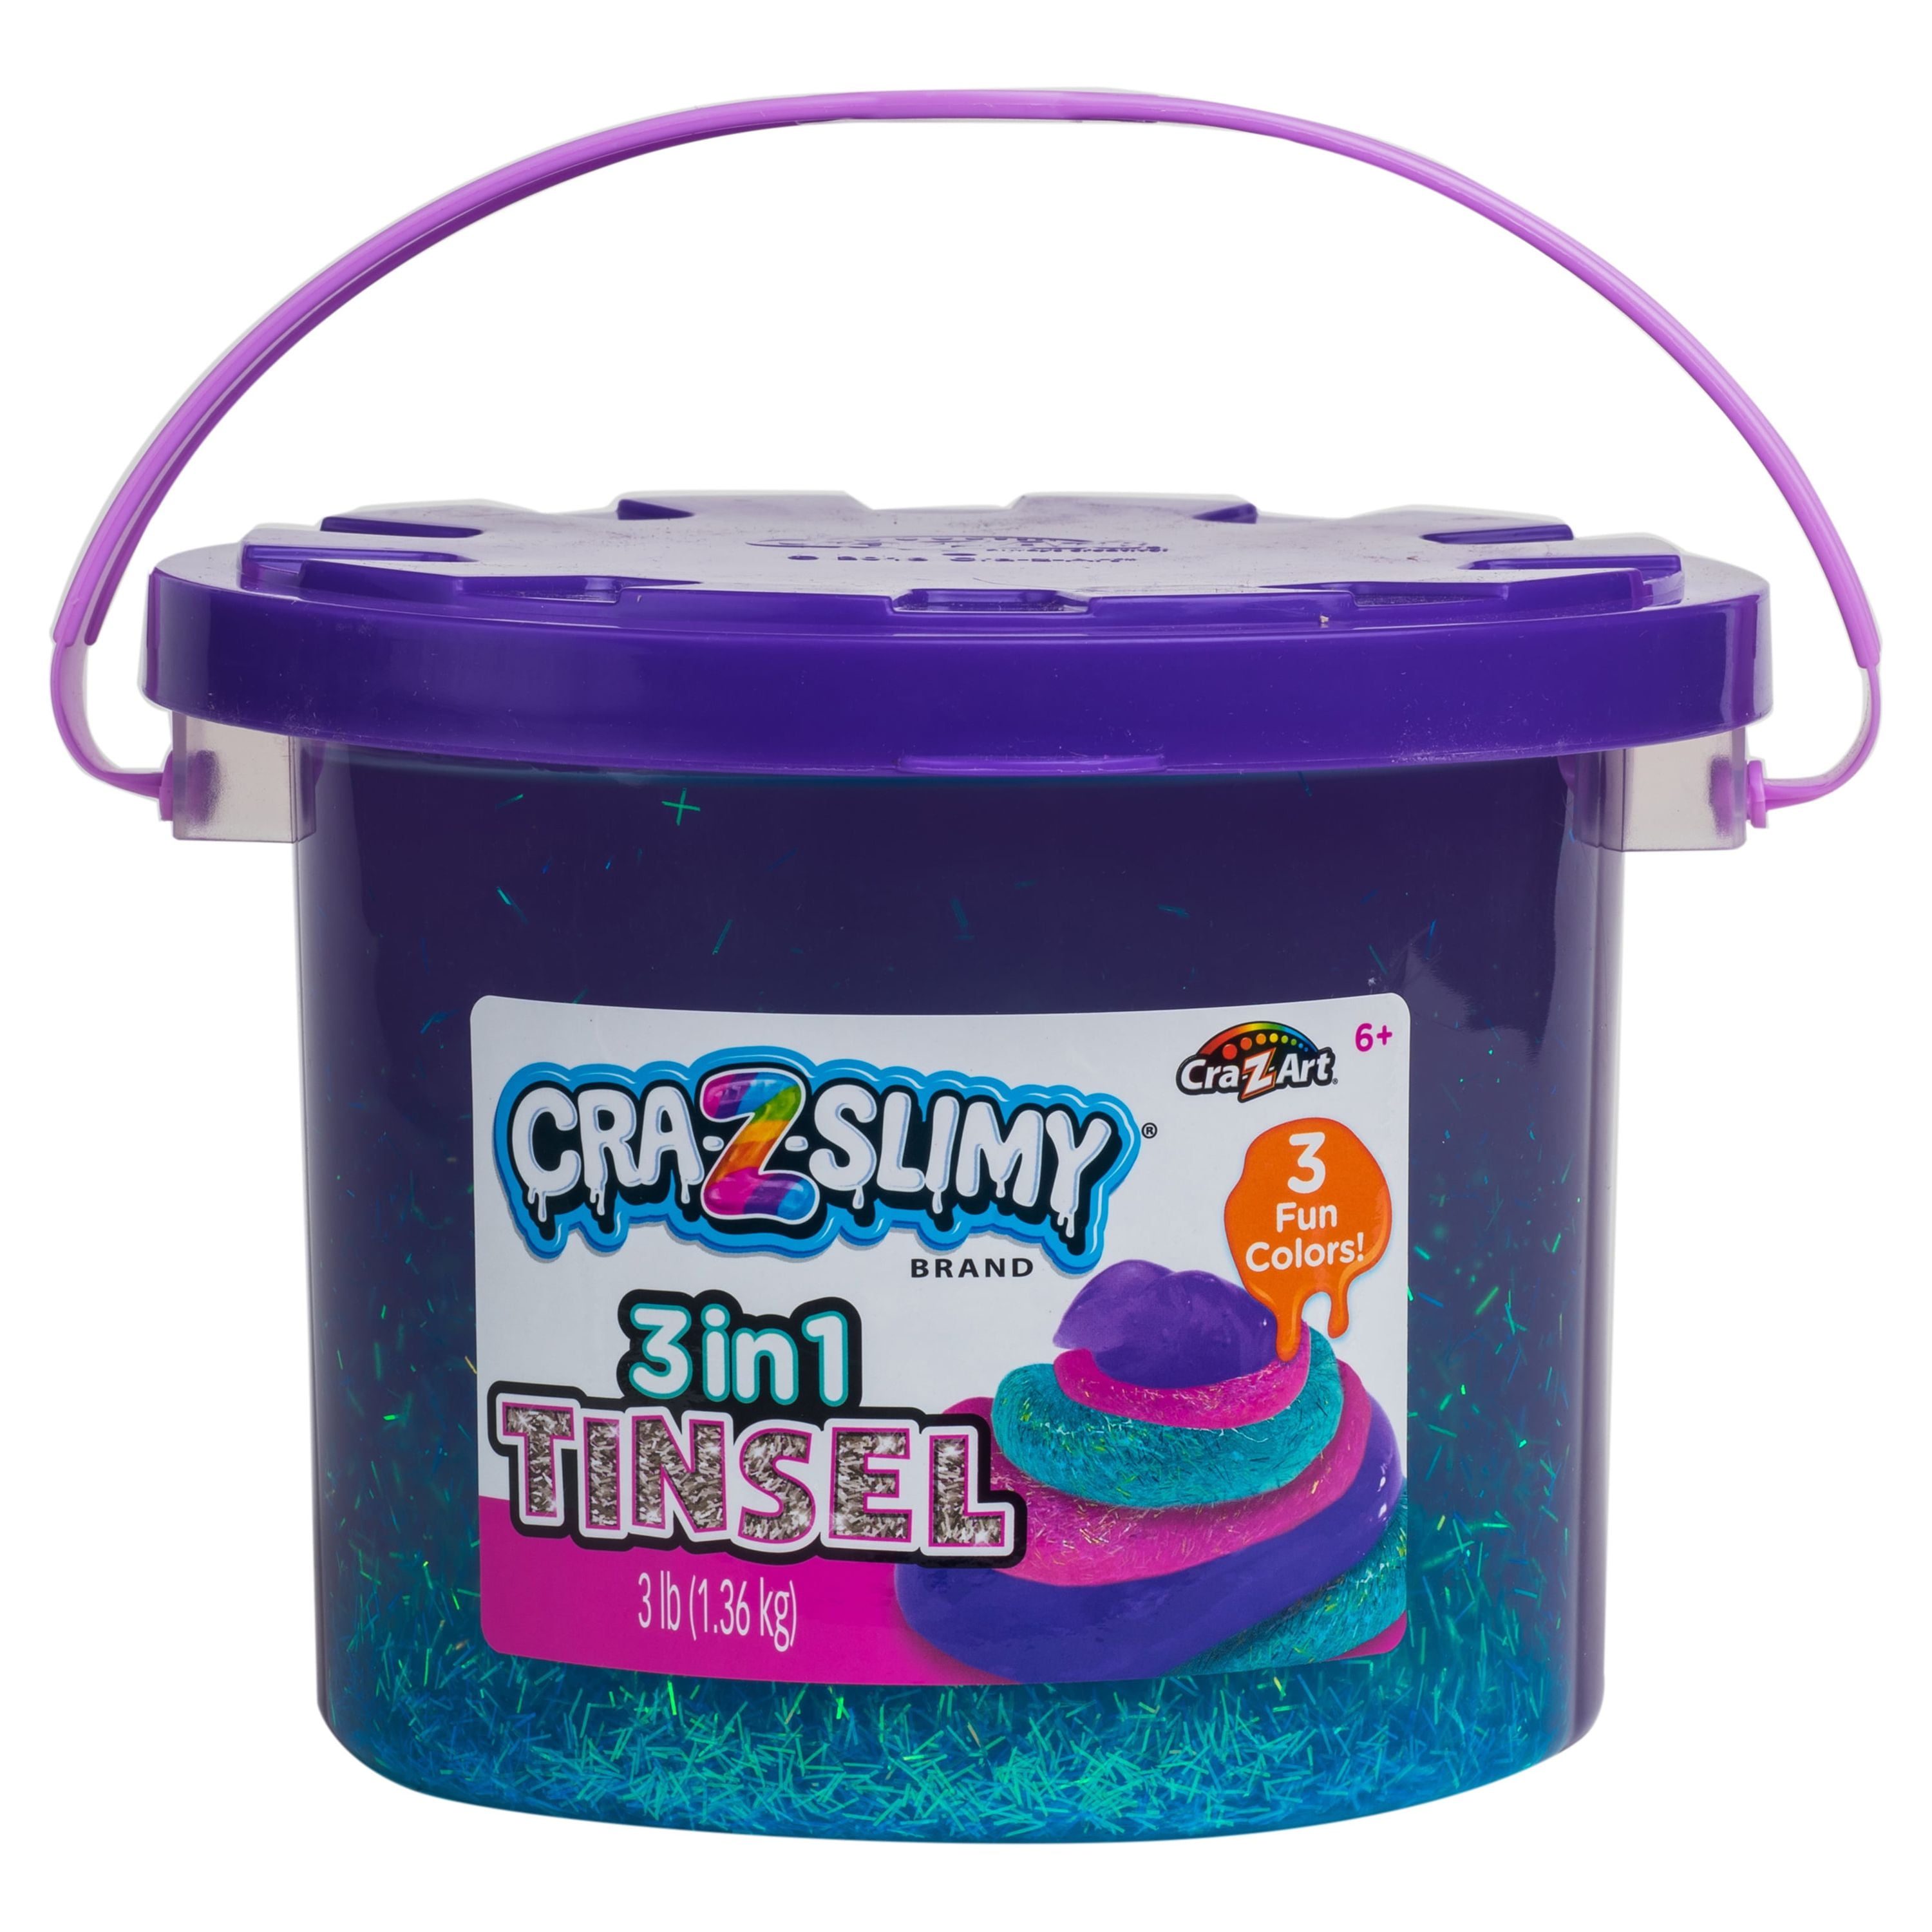 GooZooka Slime- Make your Own/DIY Colourful Super Slime Making Kit for 8+  Years